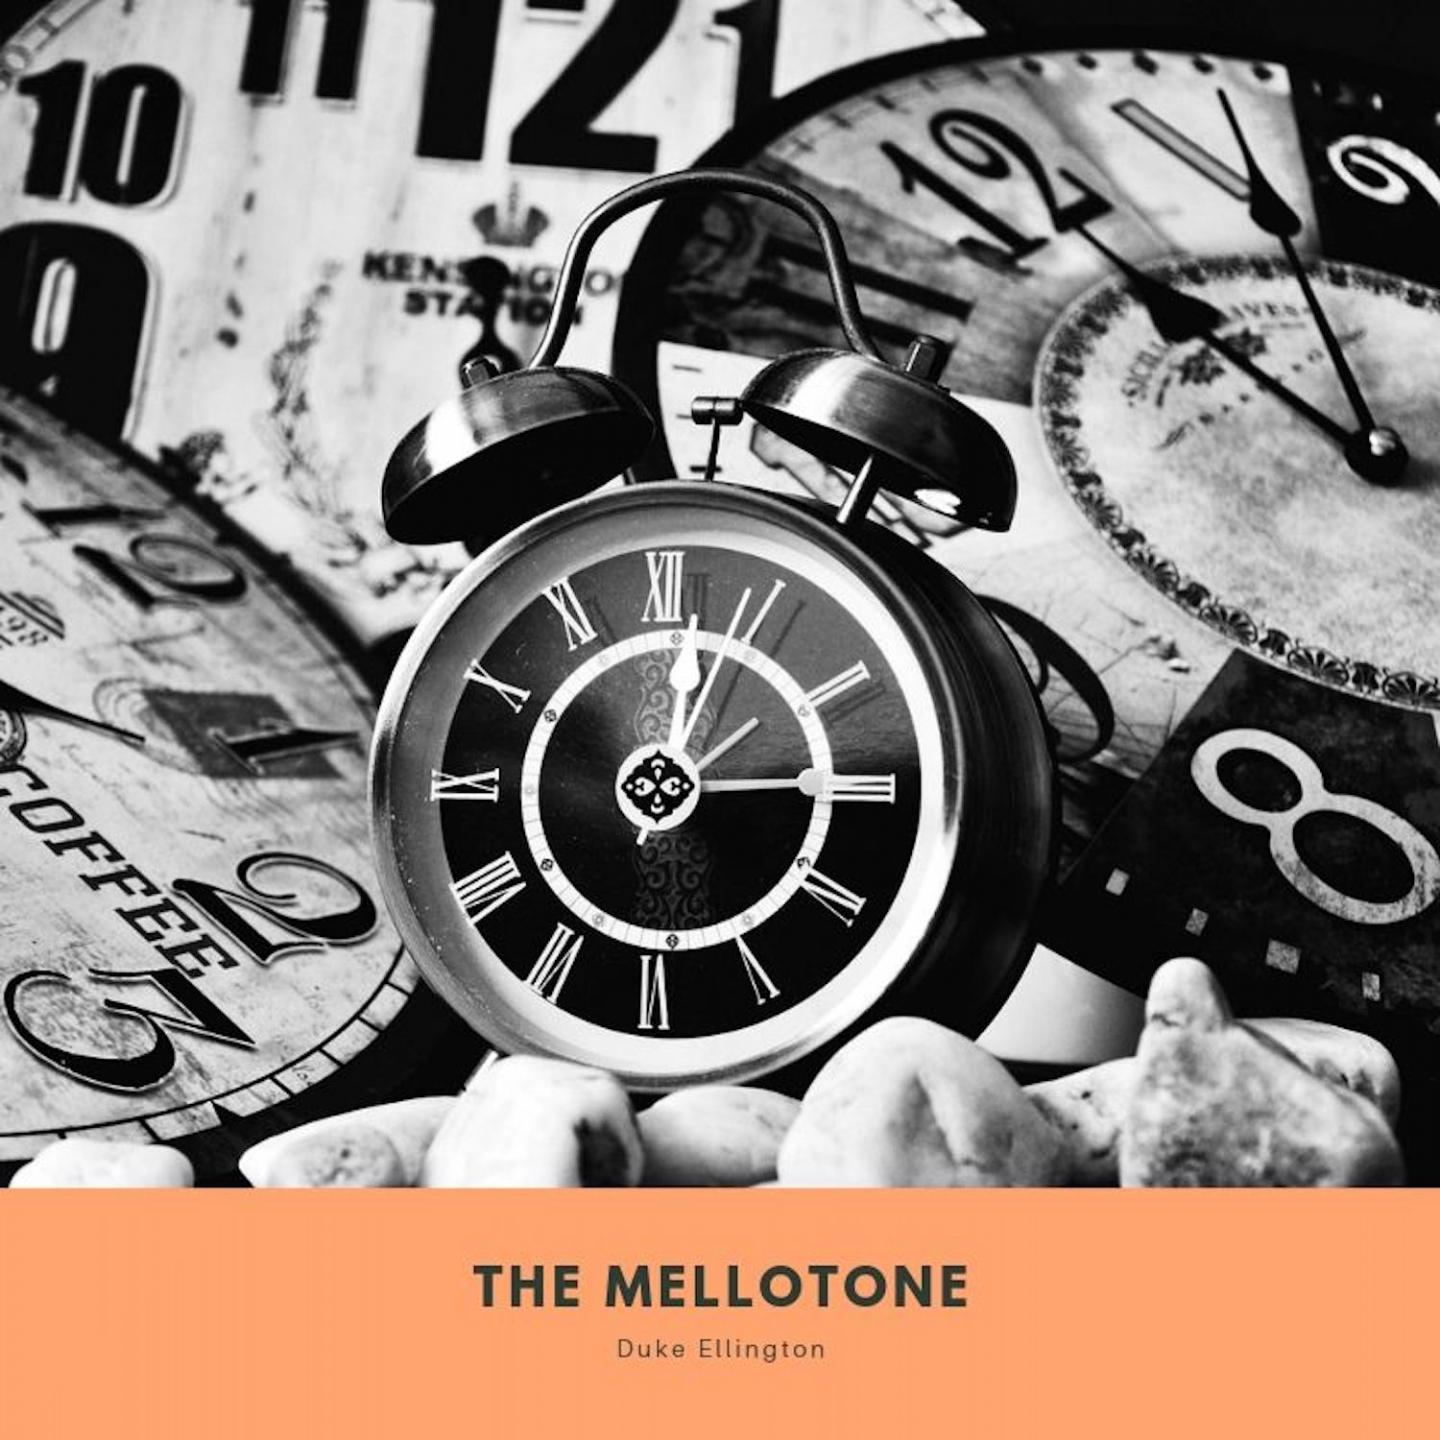 The Mellotone